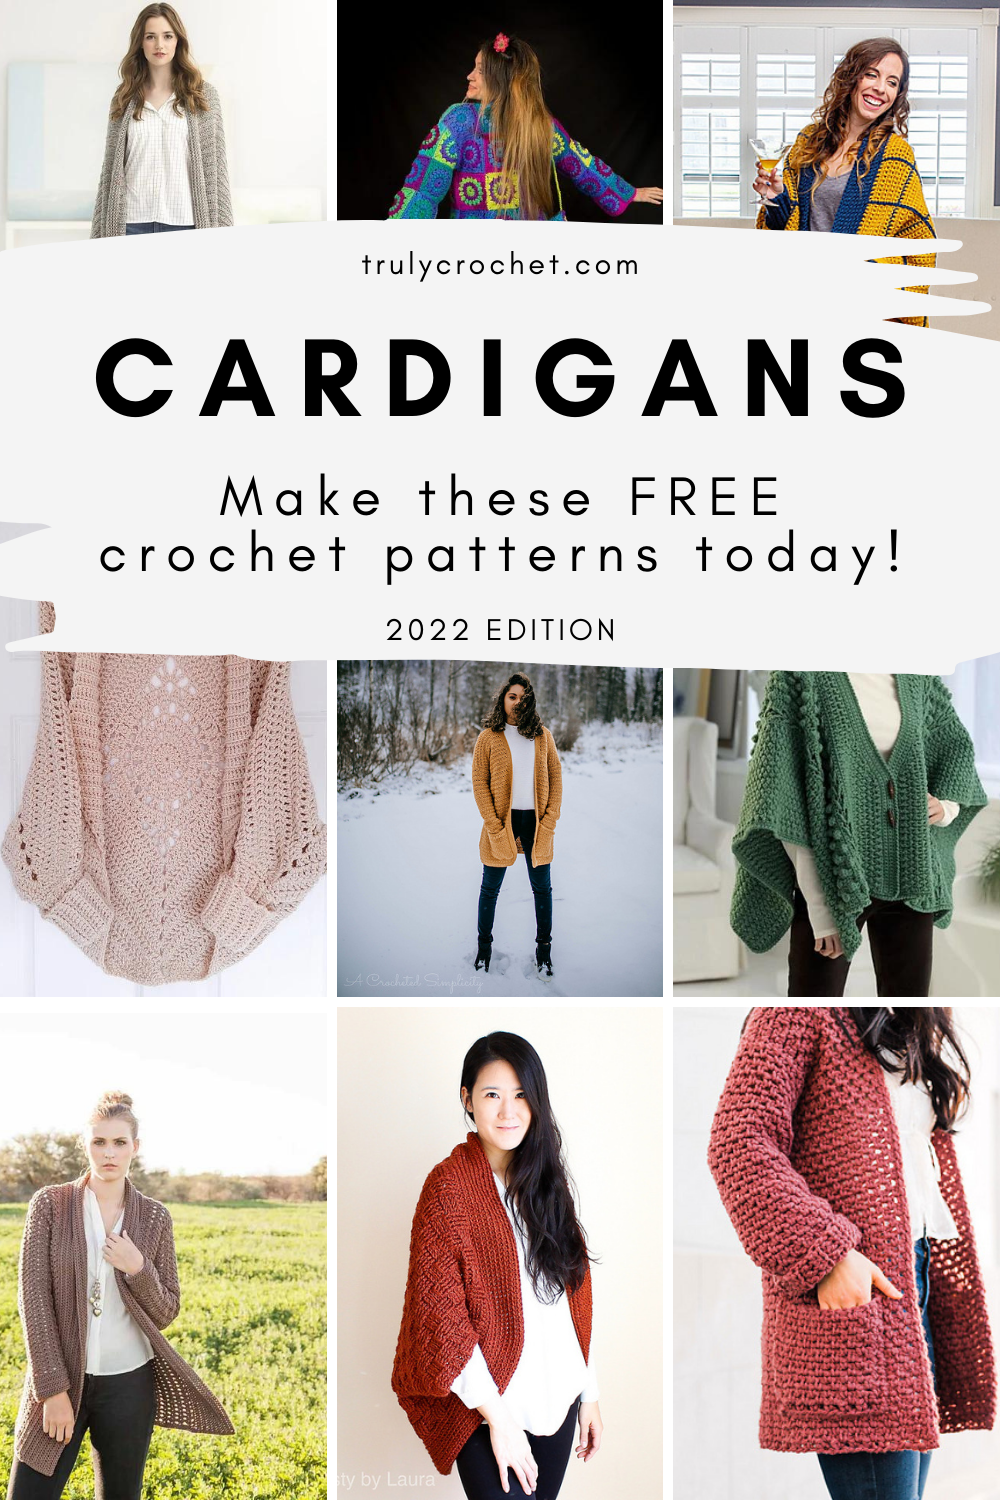 10 Cozy Crochet Patterns For Fall - Free Crochet Patterns